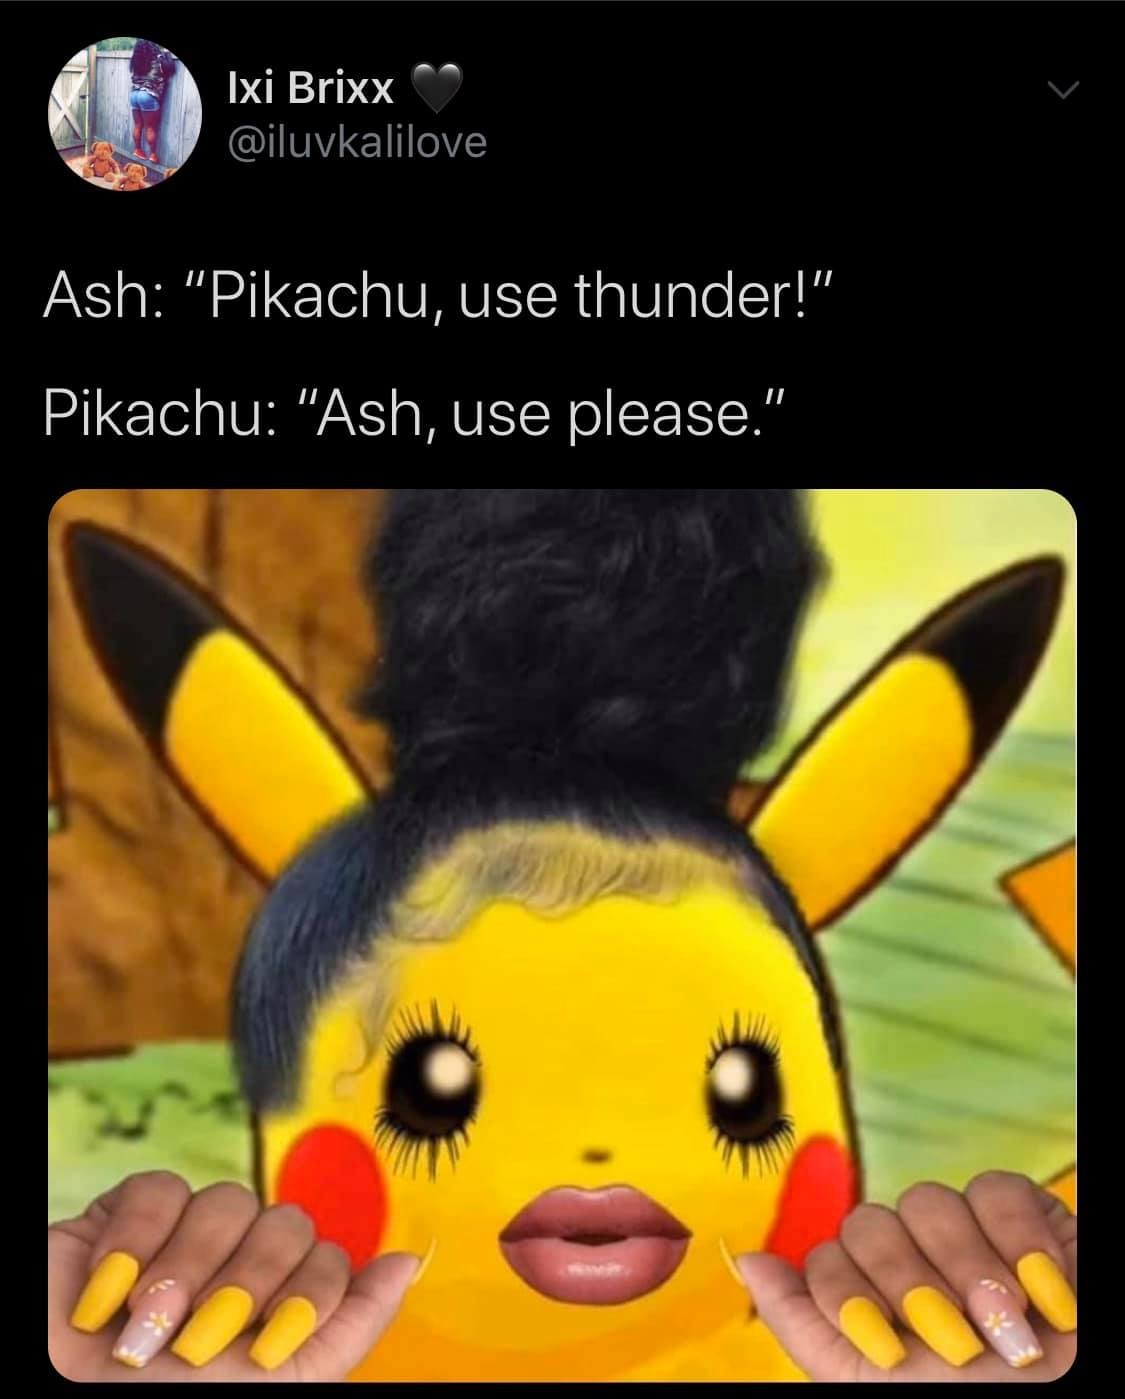 photo caption - Ixi Brixx Ash "Pikachu, use thunder!" Pikachu "Ash, use please."